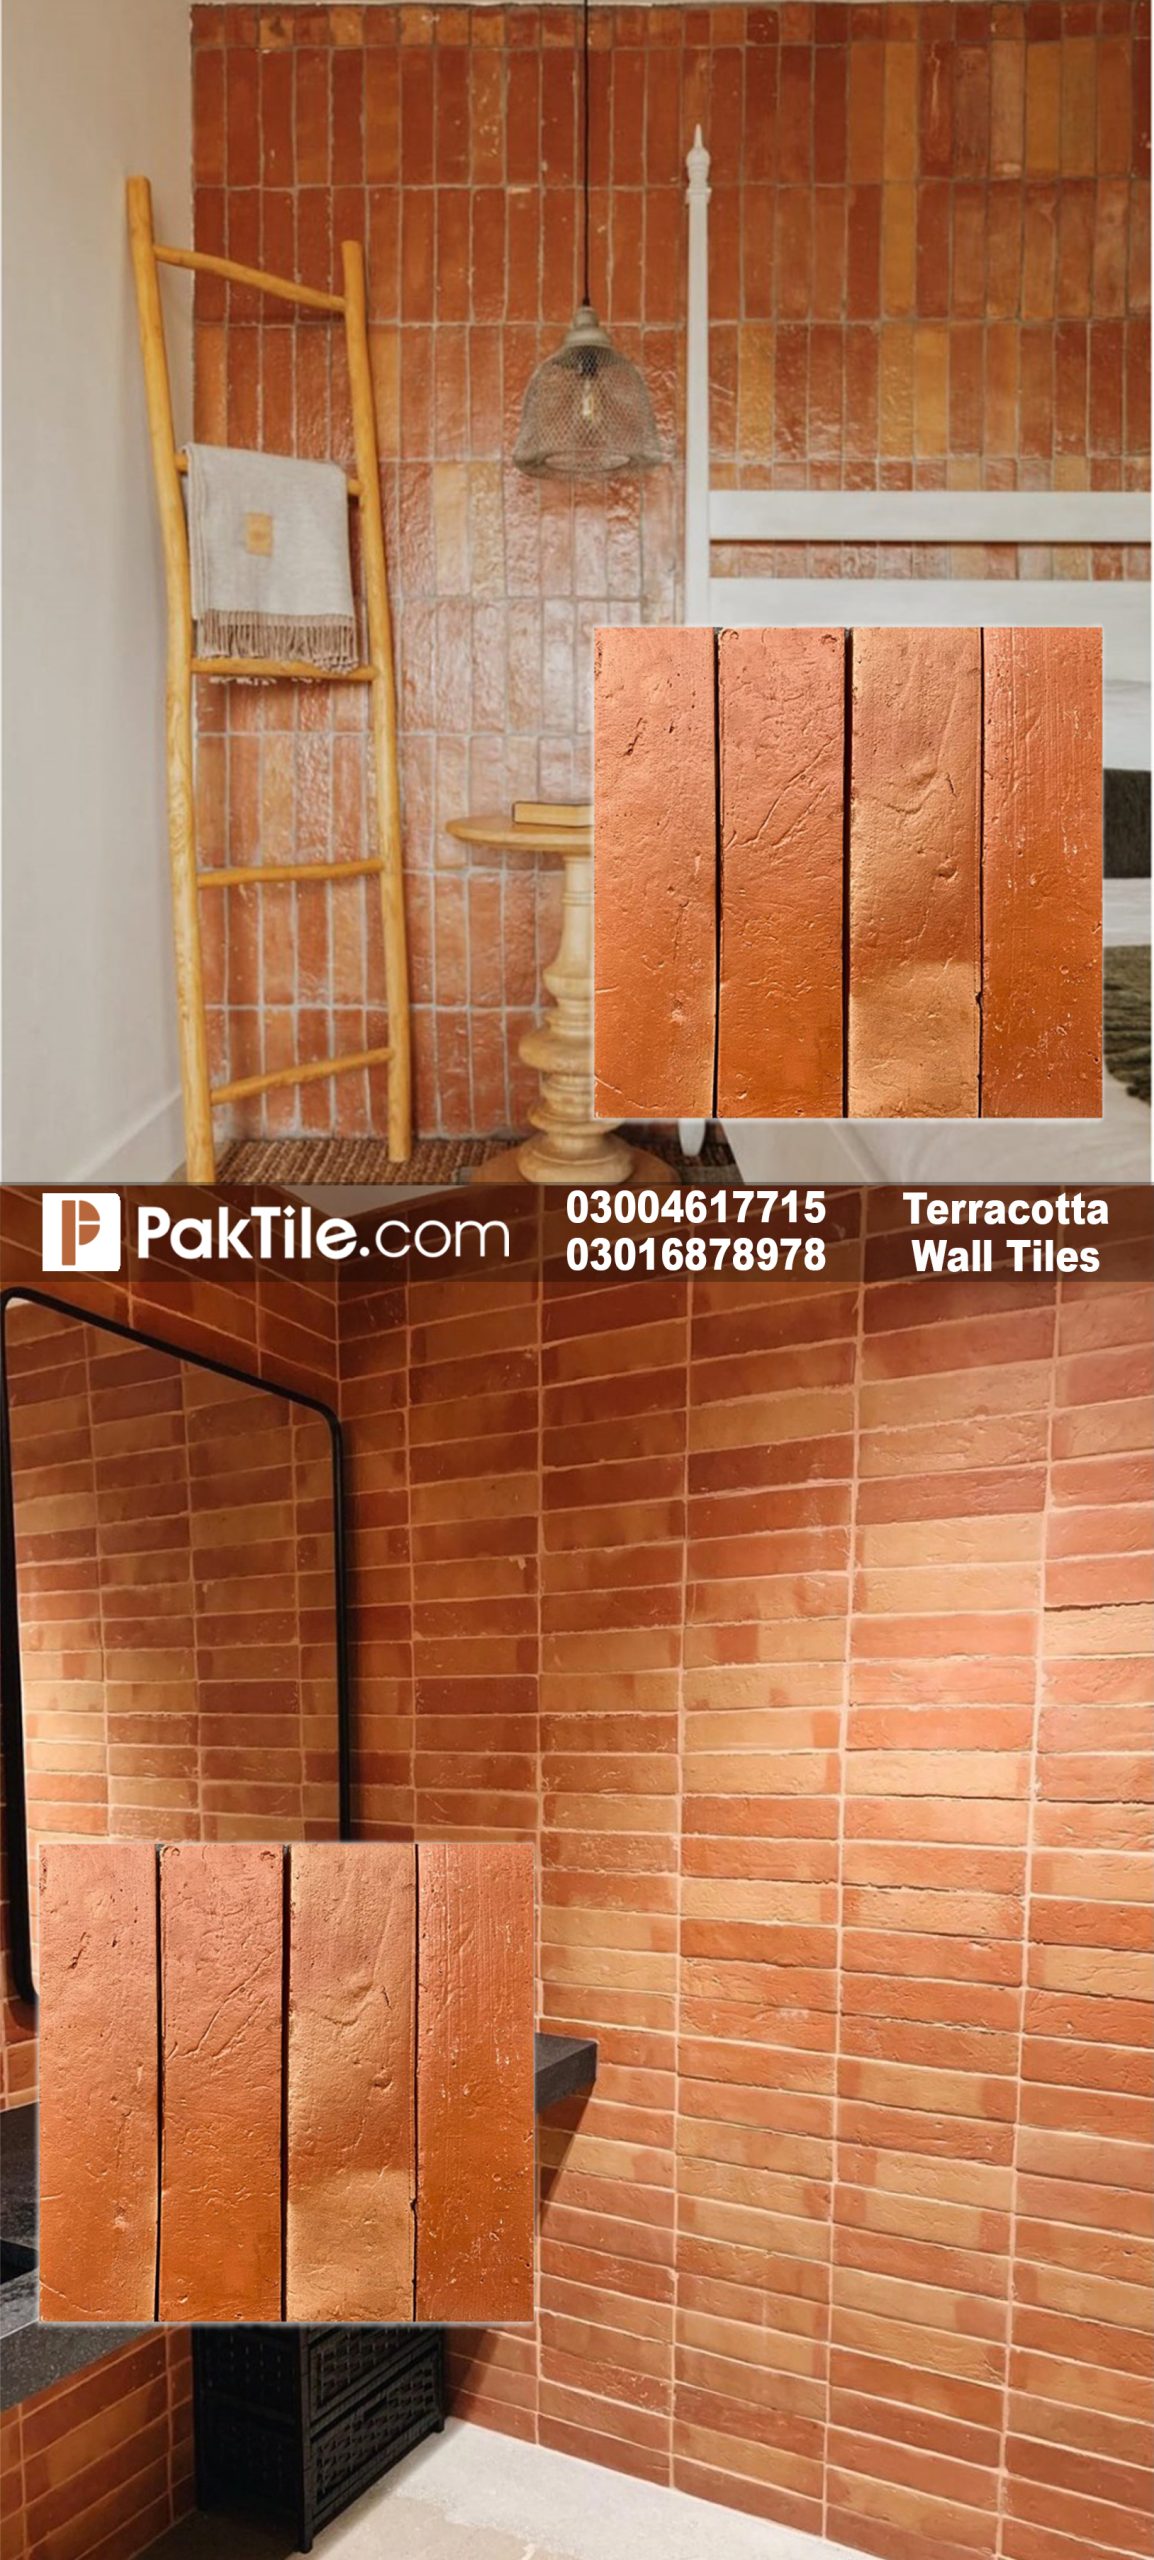 Terracotta Wall Tiles Design in Pakistan